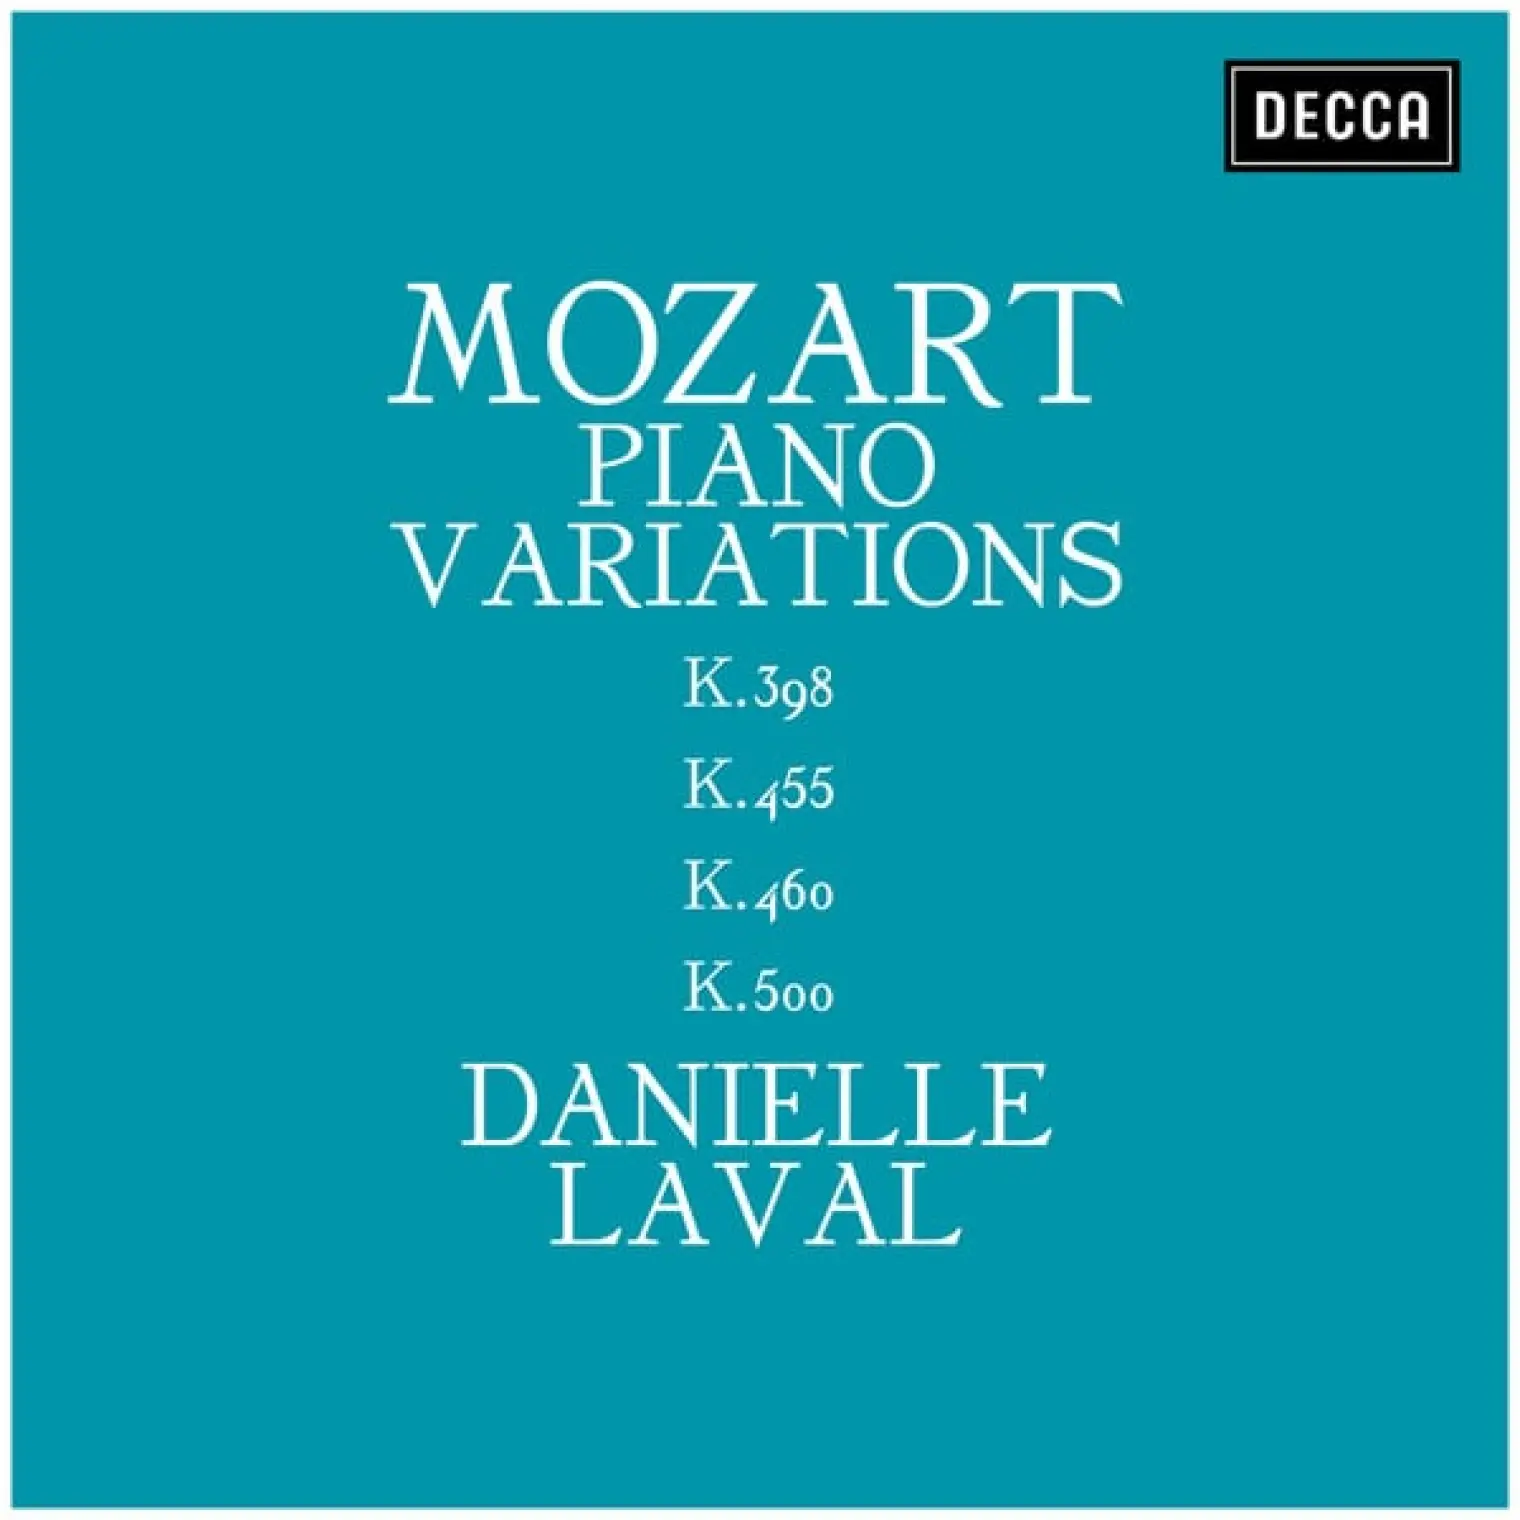 Mozart: Piano Variations K.398, K.455, K.460, K.500 -  Danielle Laval 